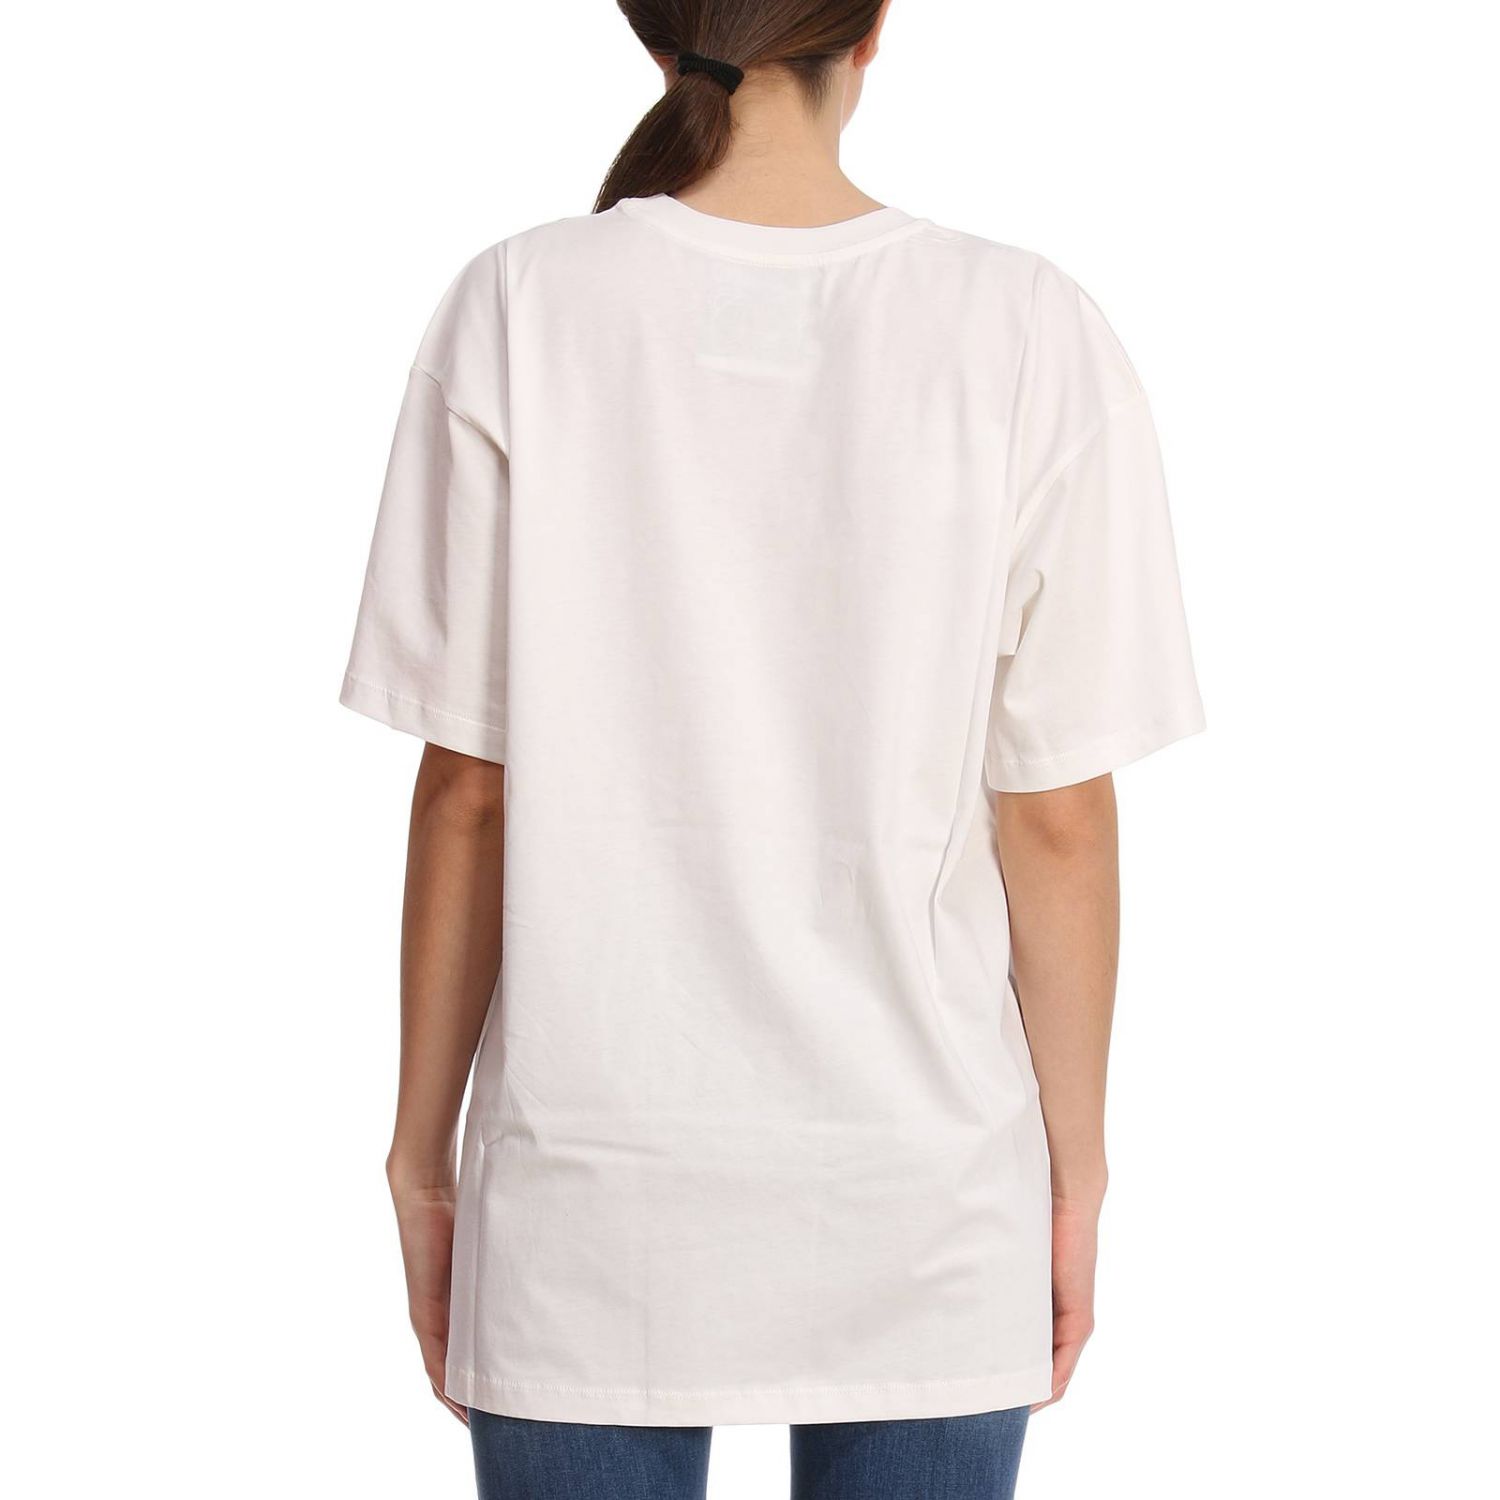 Moschino Couture Outlet: T-shirt women - White | T-Shirt Moschino ...